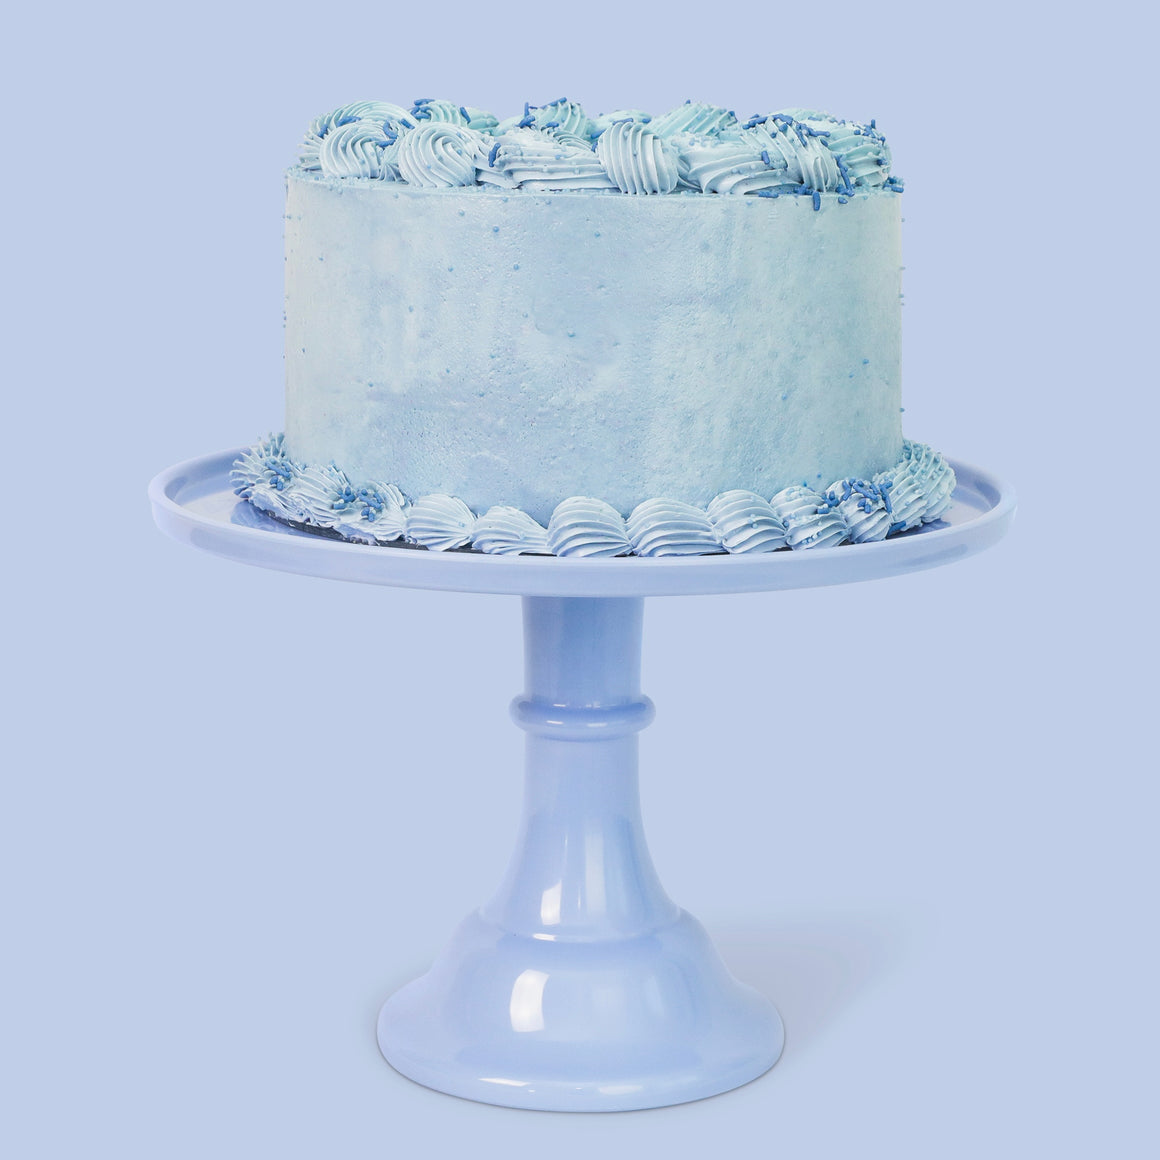 CAKE STAND - BLUE WEDGEWOOD MELAMINE